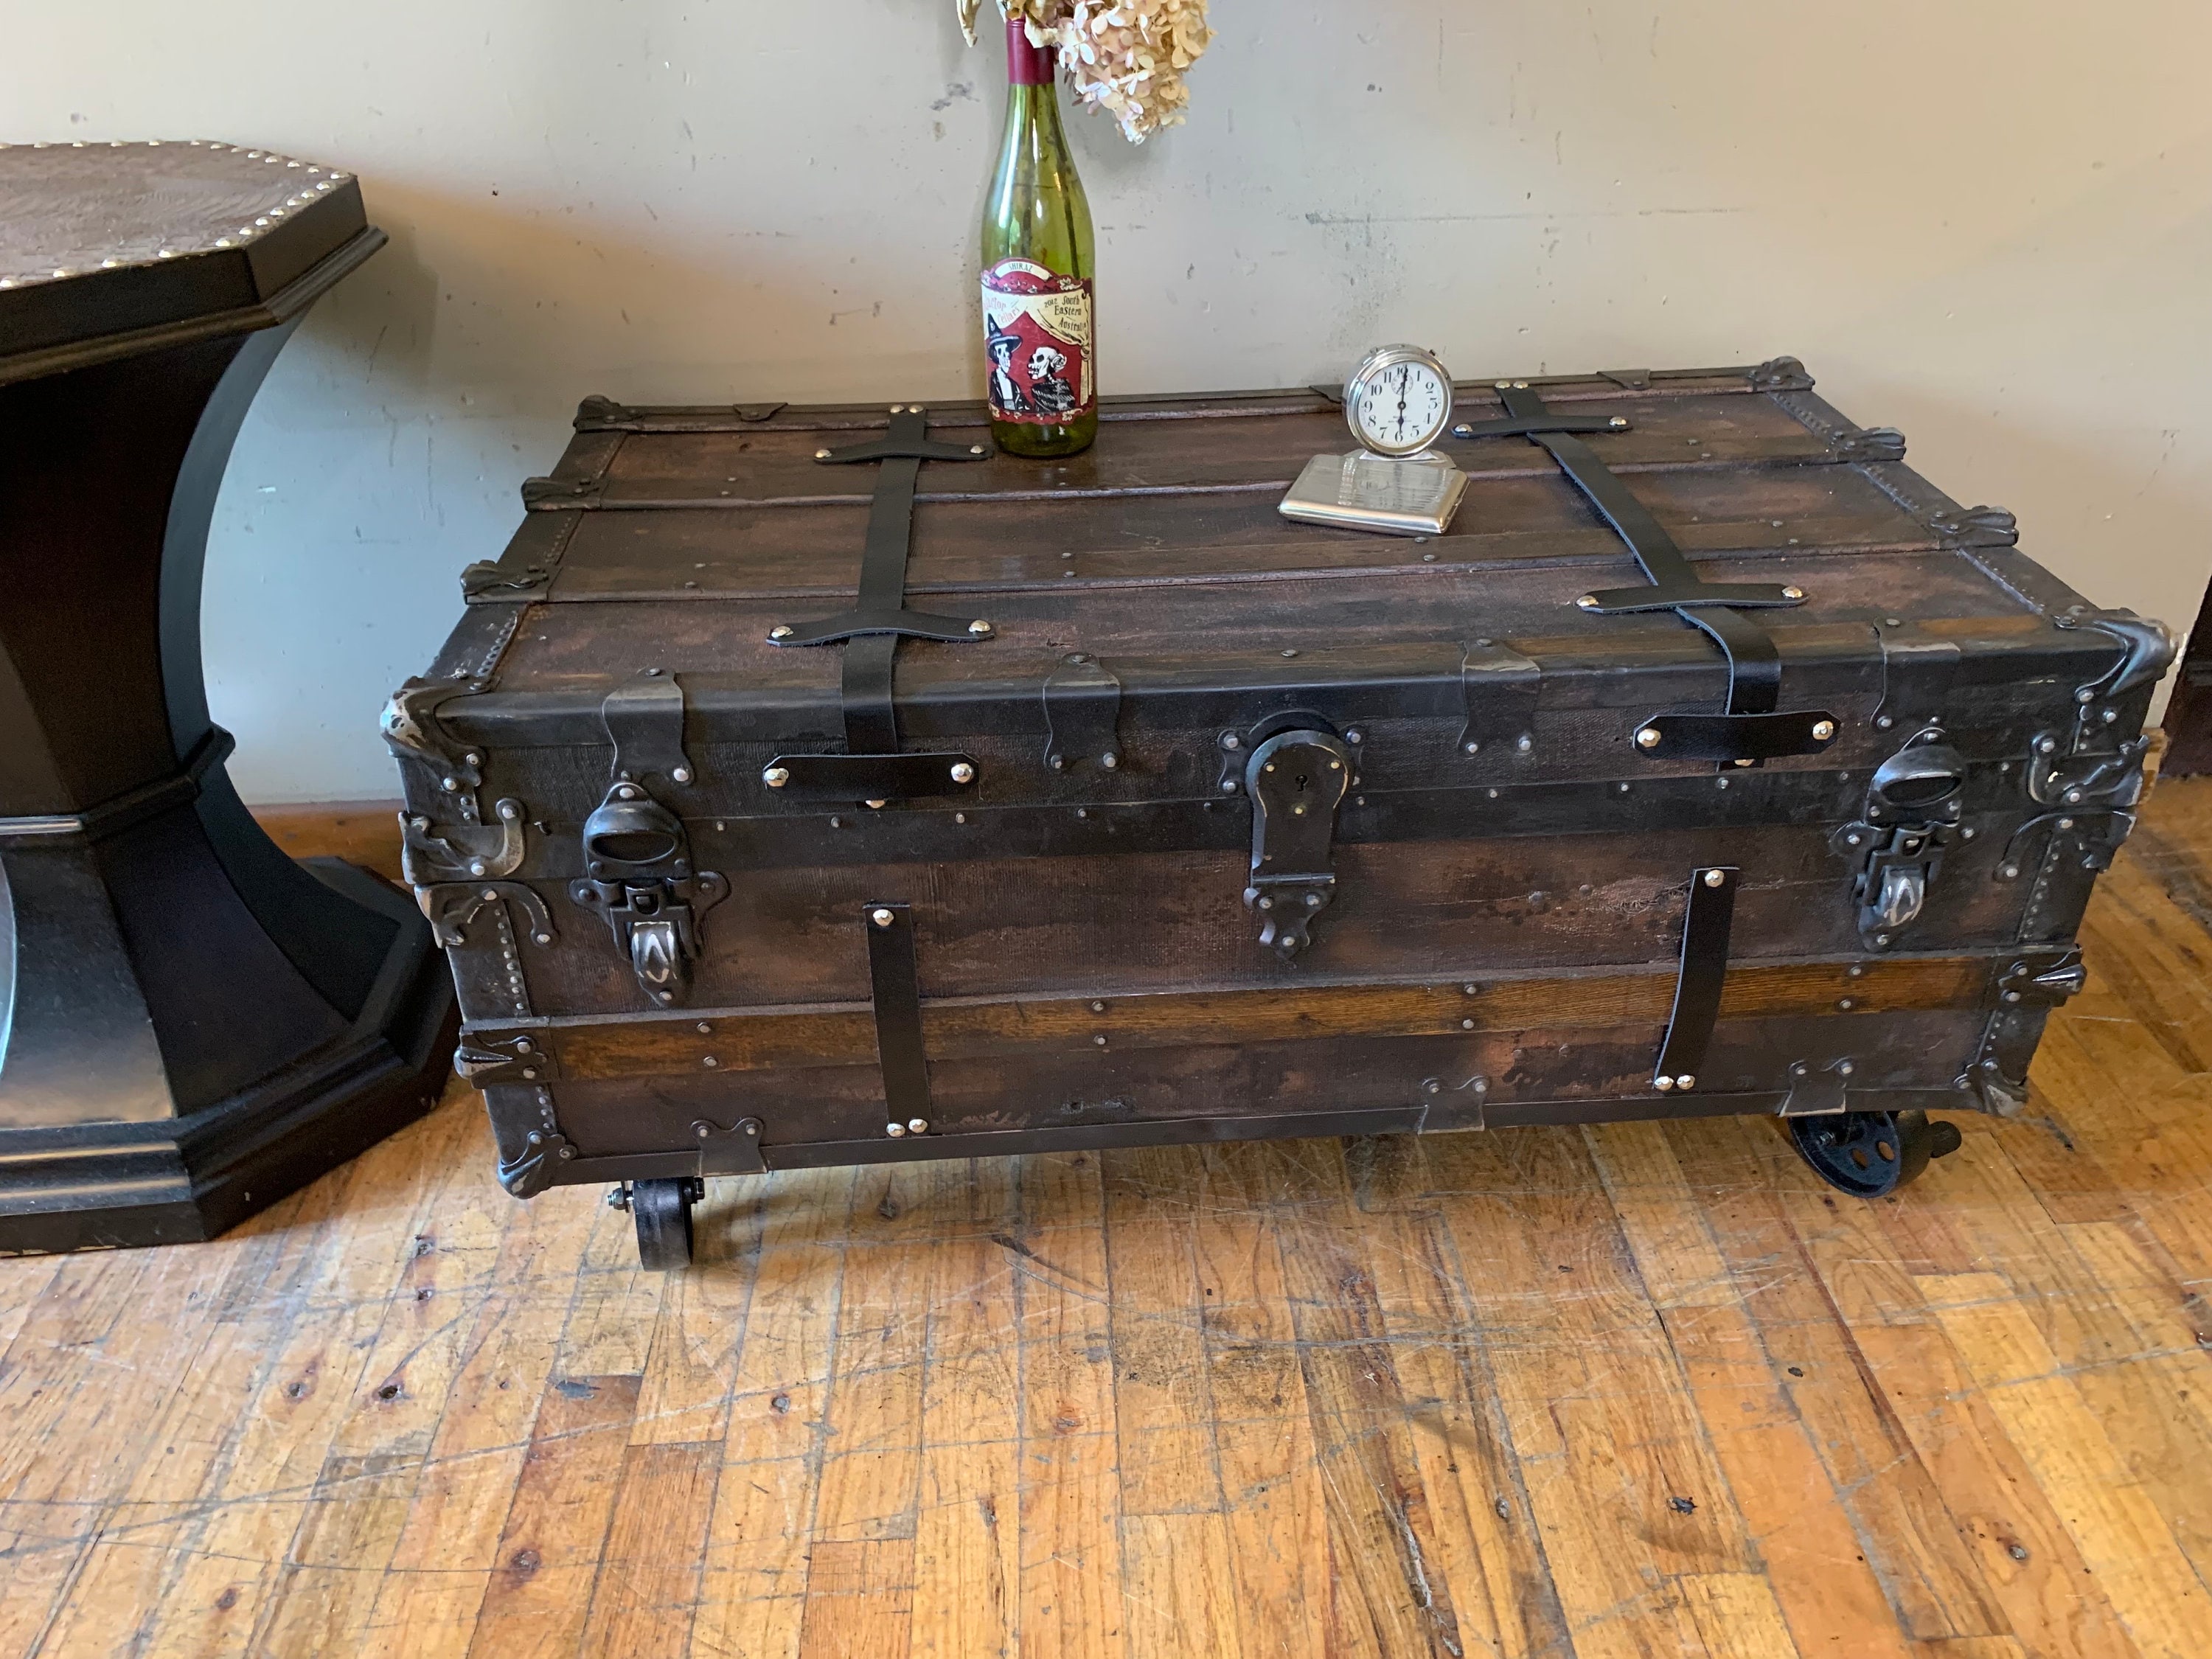 SOLD - Vintage / Industrial Steamer Trunk Coffee Table